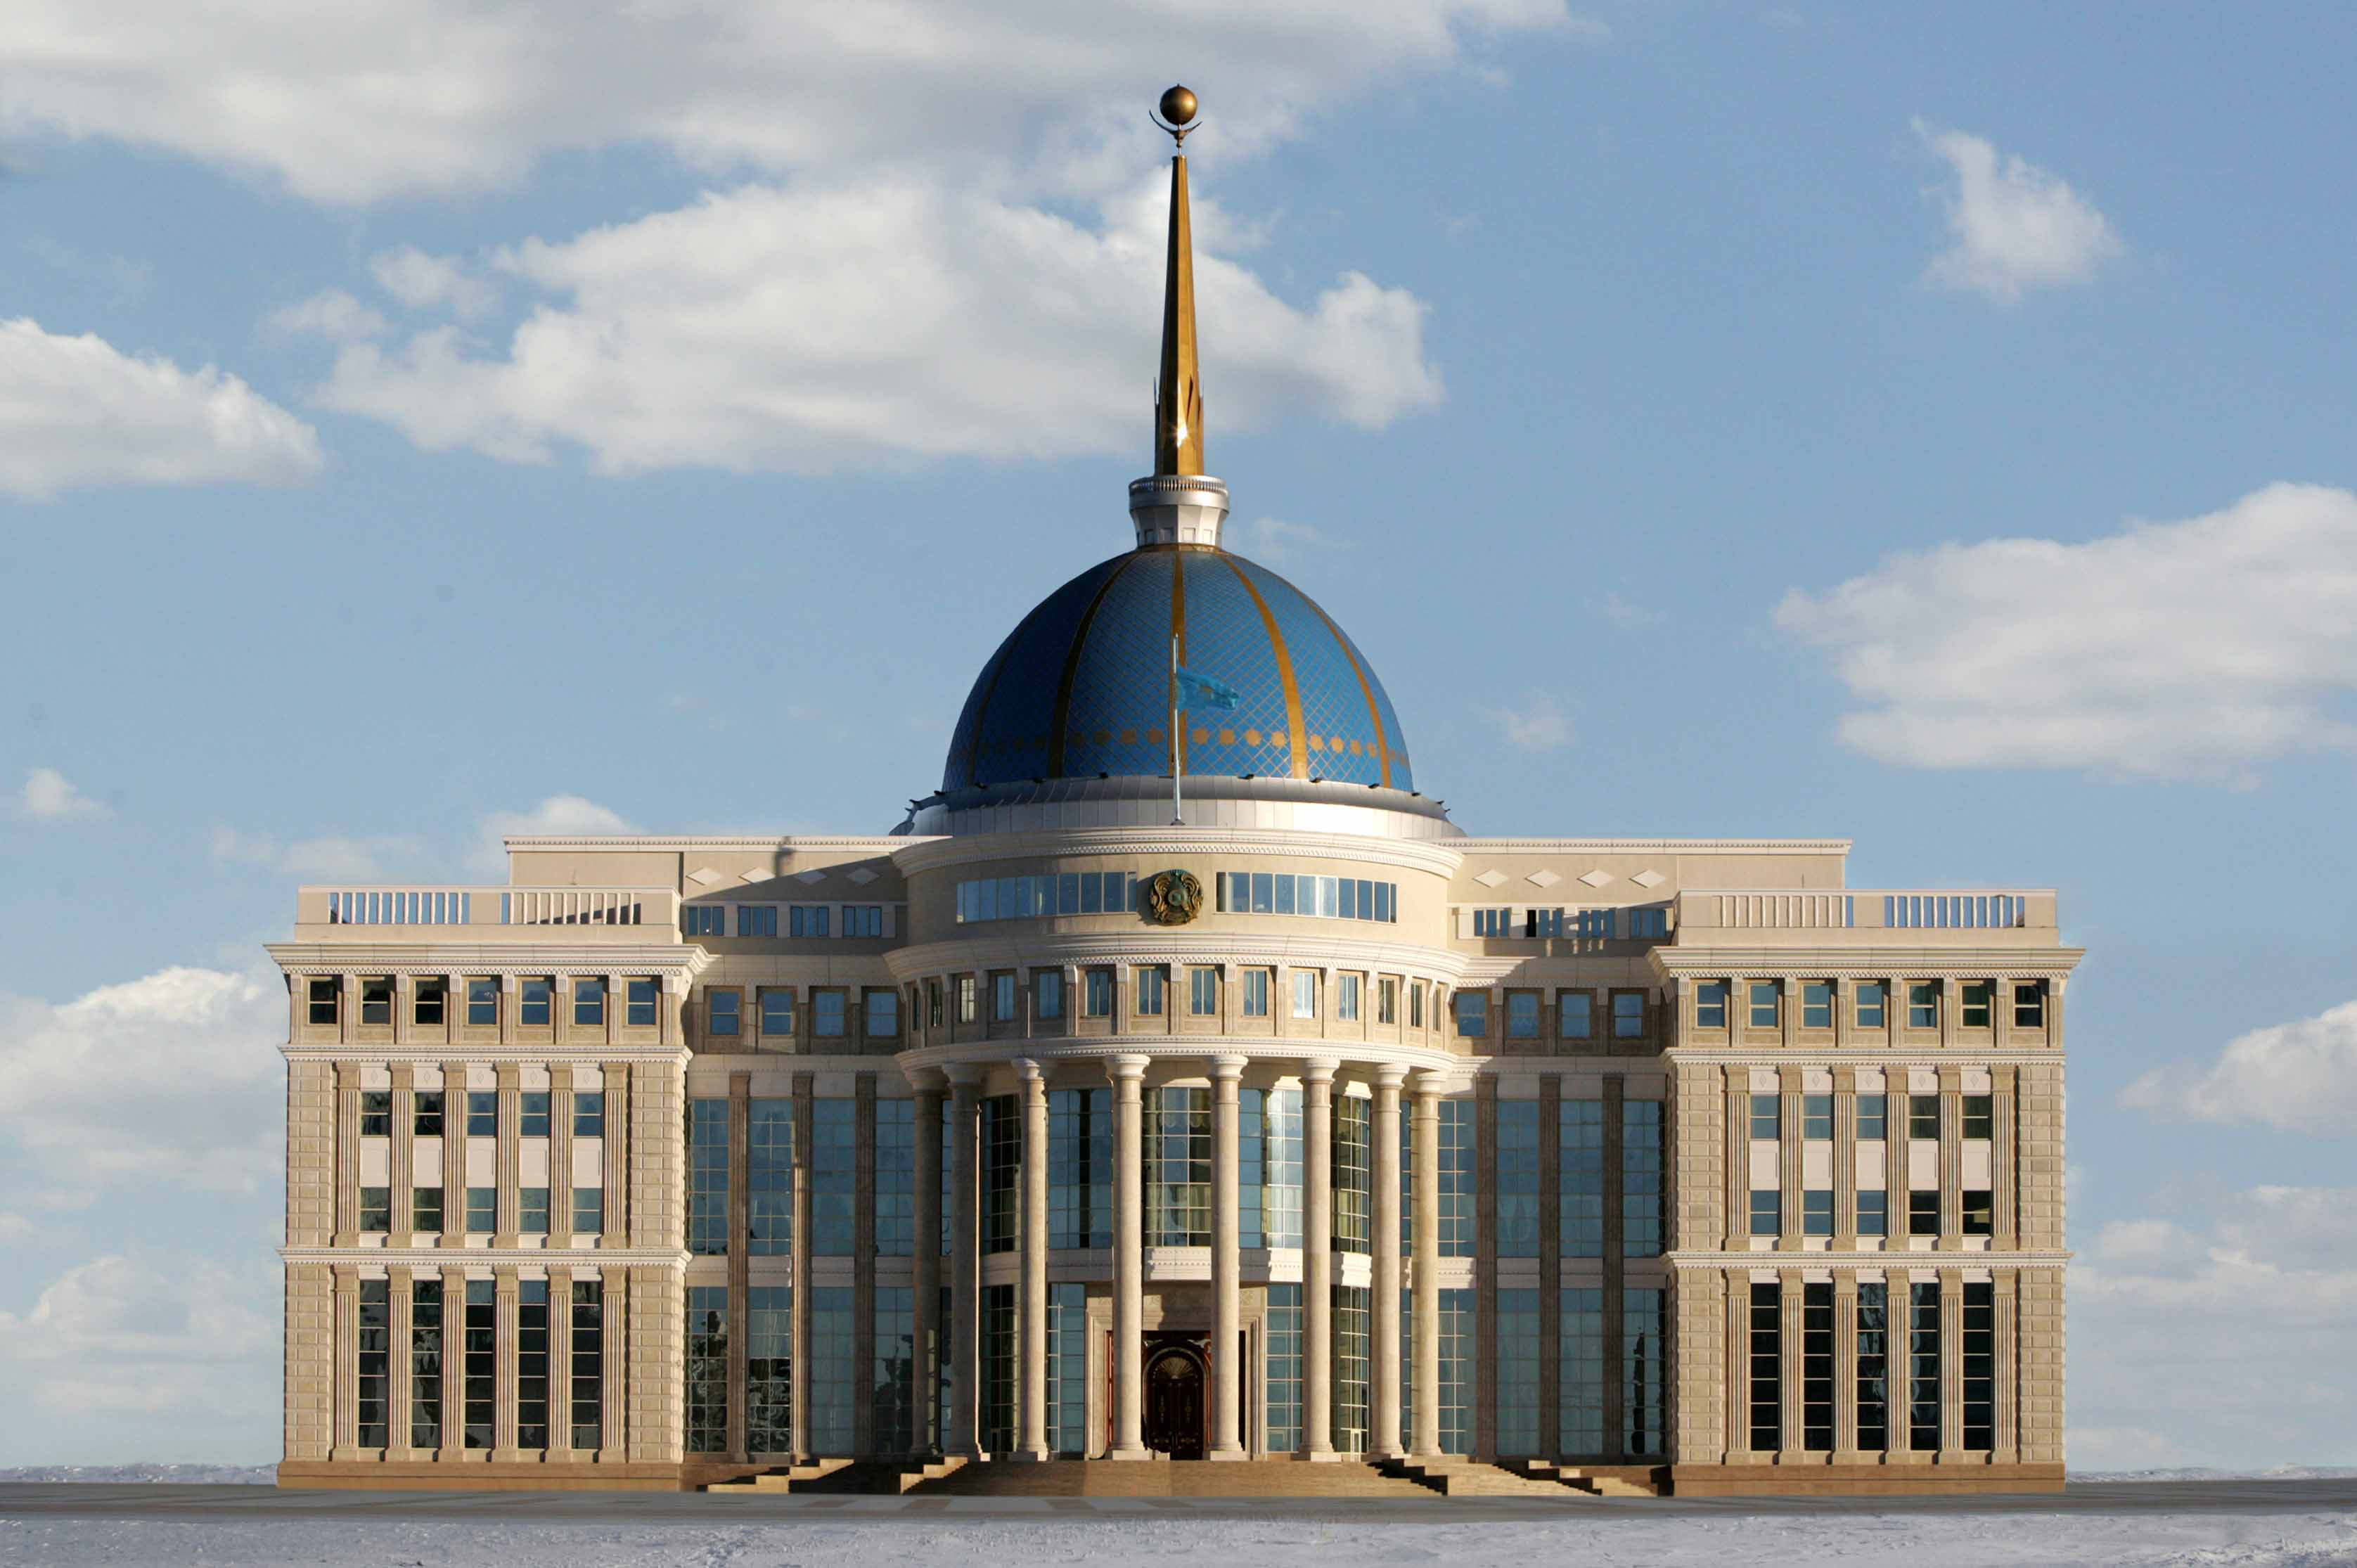 Kazakh President send a telegram of congratulations to Recep Tayyip Erdogan